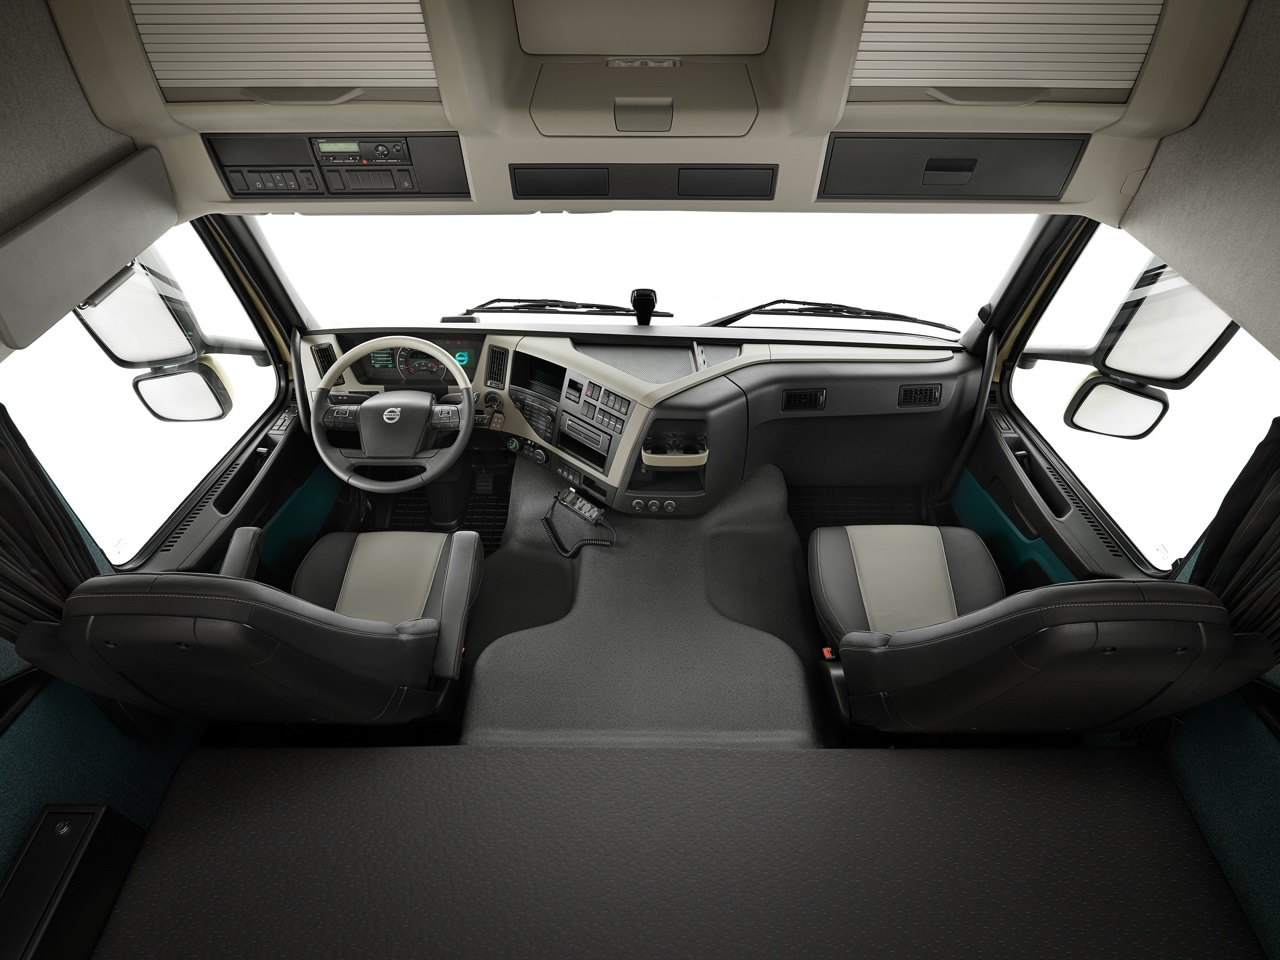 New-Volvo-FM-interior.jpg